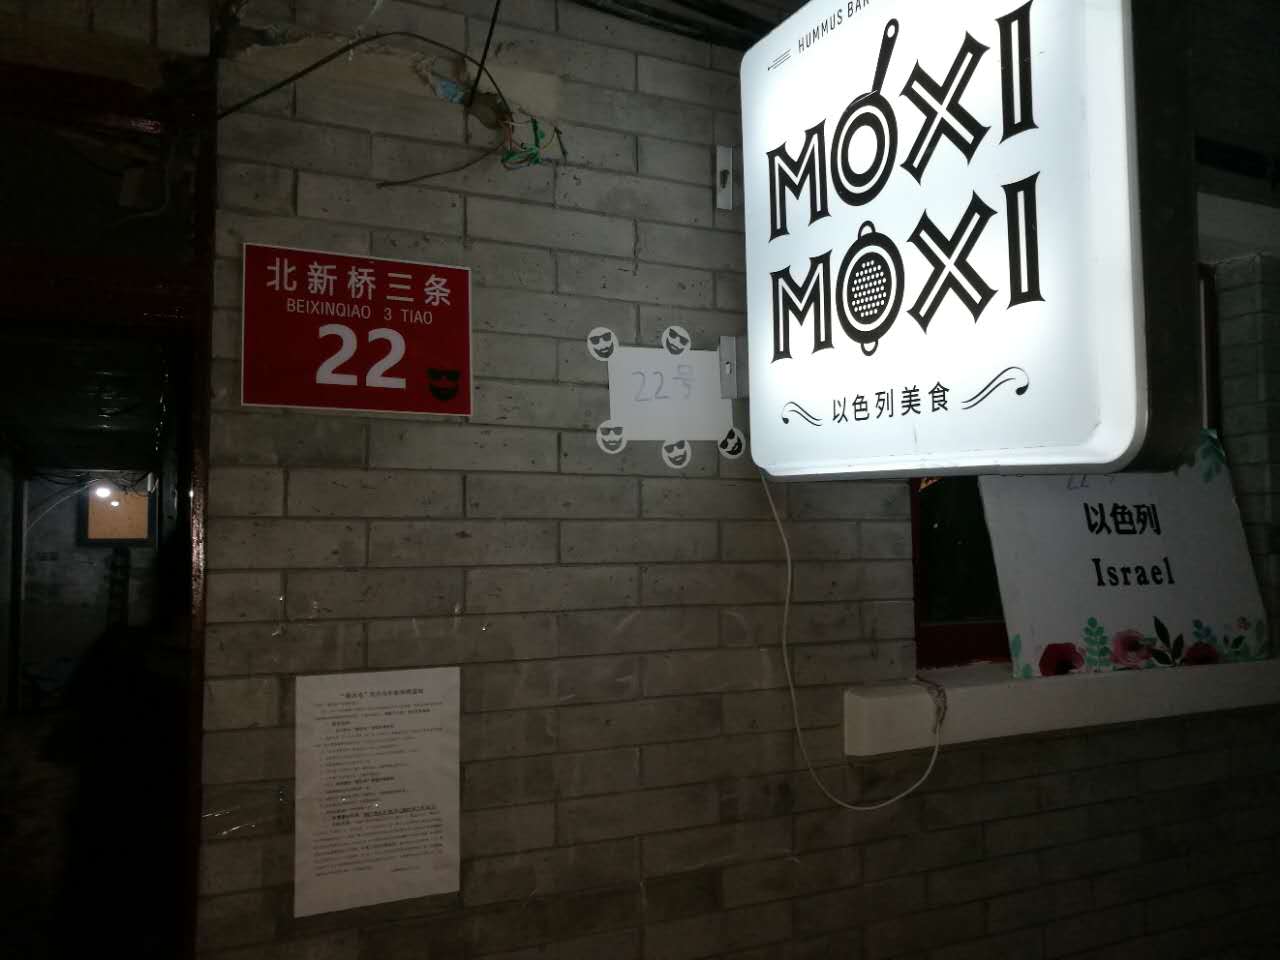 Return of the Pita: MoxiMoxi Reopens at Bigger New Beixinqiao Location  